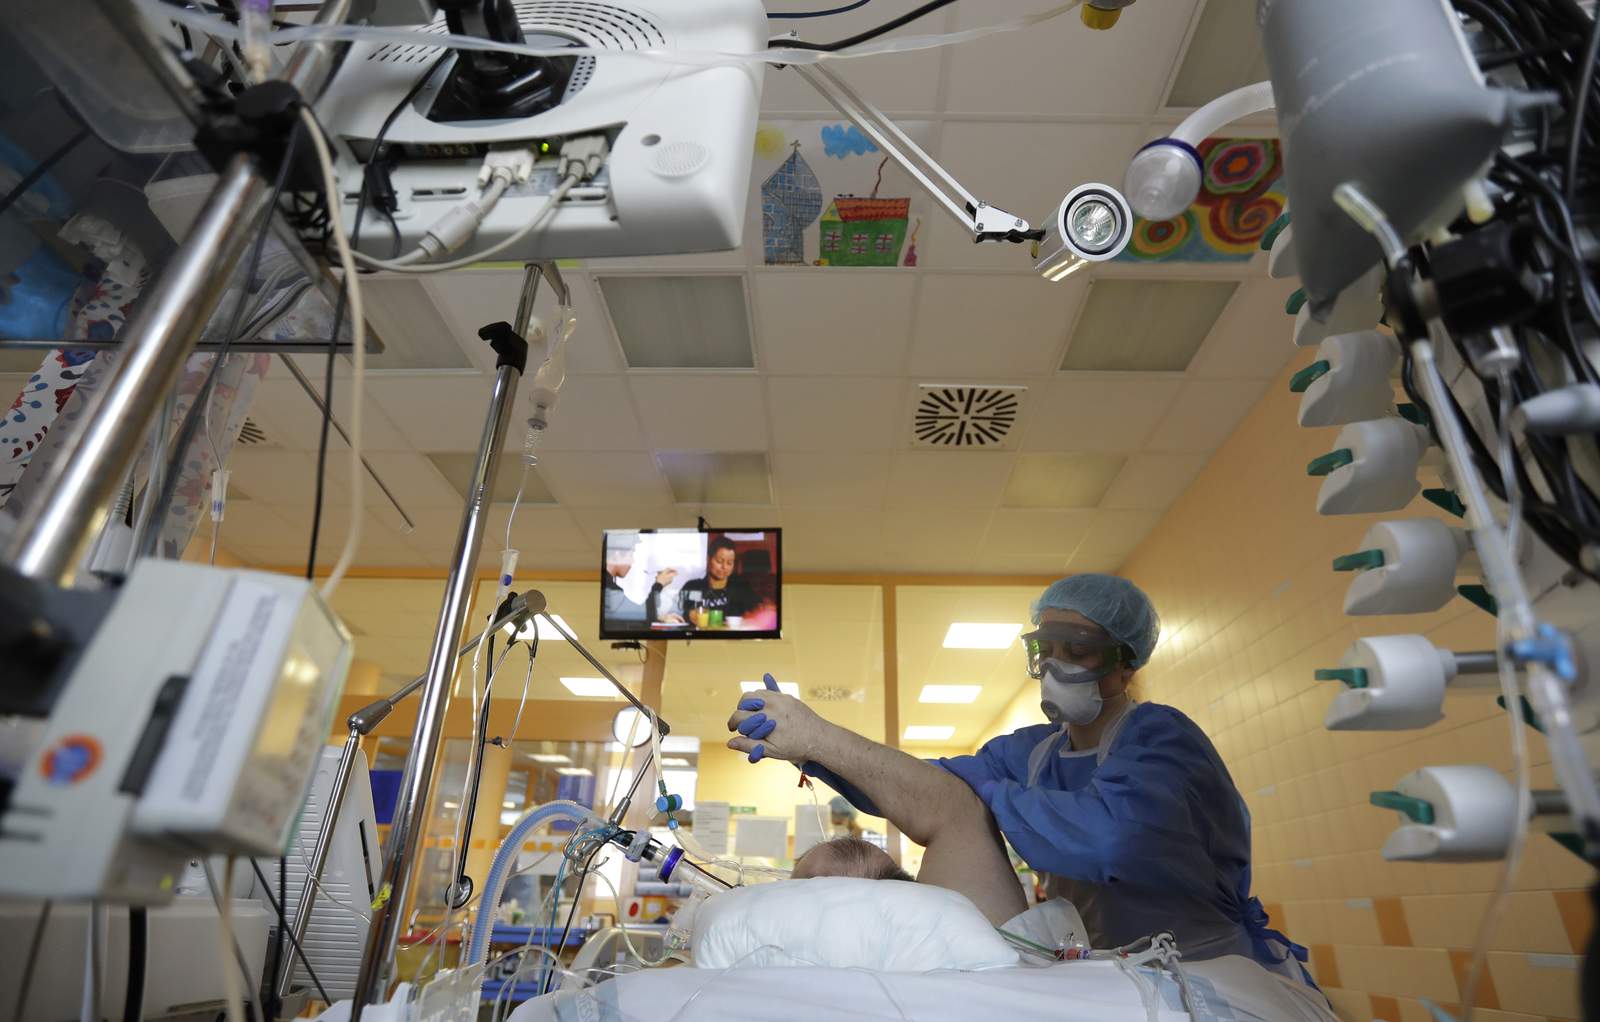 Amid pandemic, Czech intensive care ward is still half-full